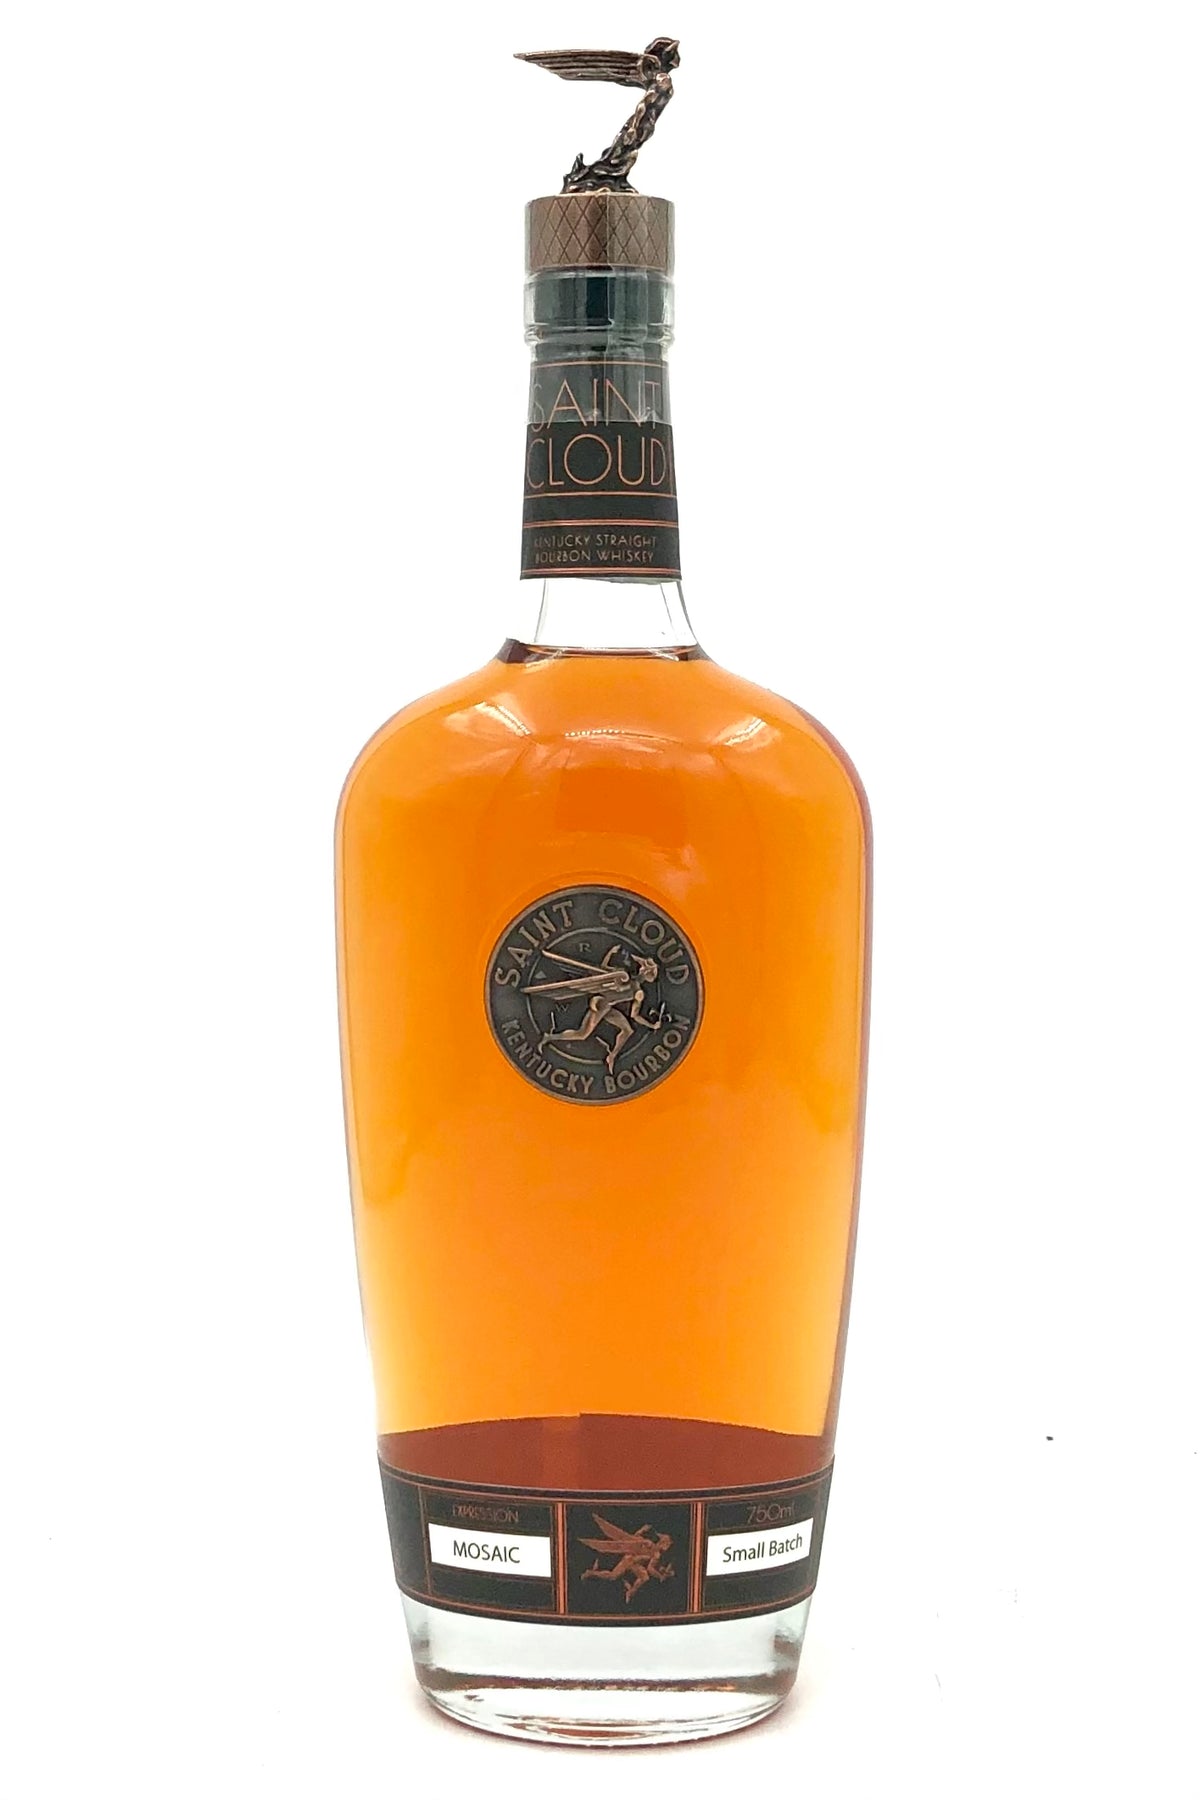 Saint Cloud Small Batch Bourbon Whiskey